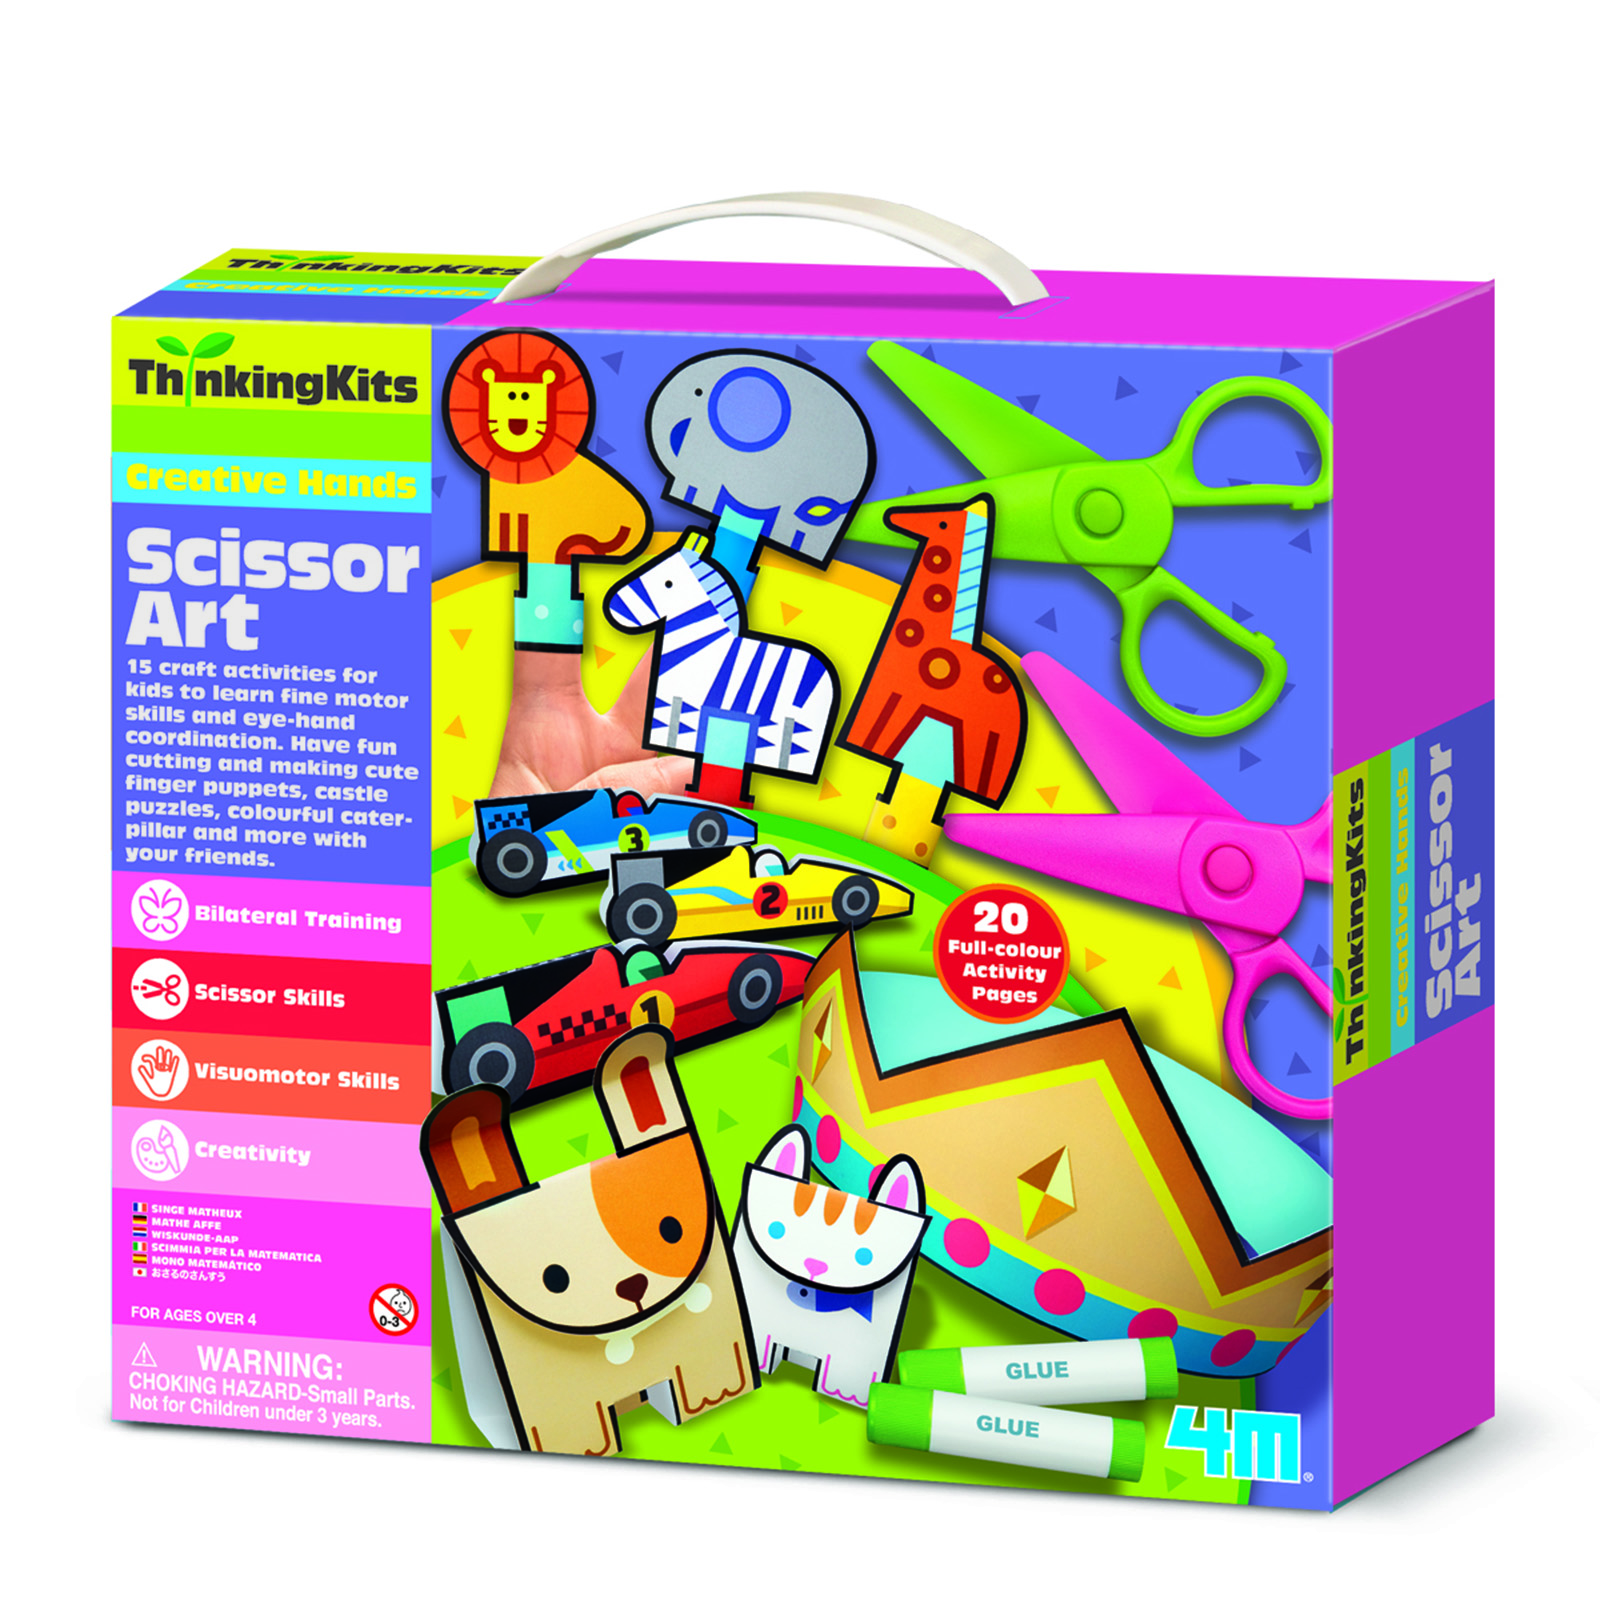 ThinkingKits - Scissor Art - 4M (JC-C4691) Educational Resources and ...